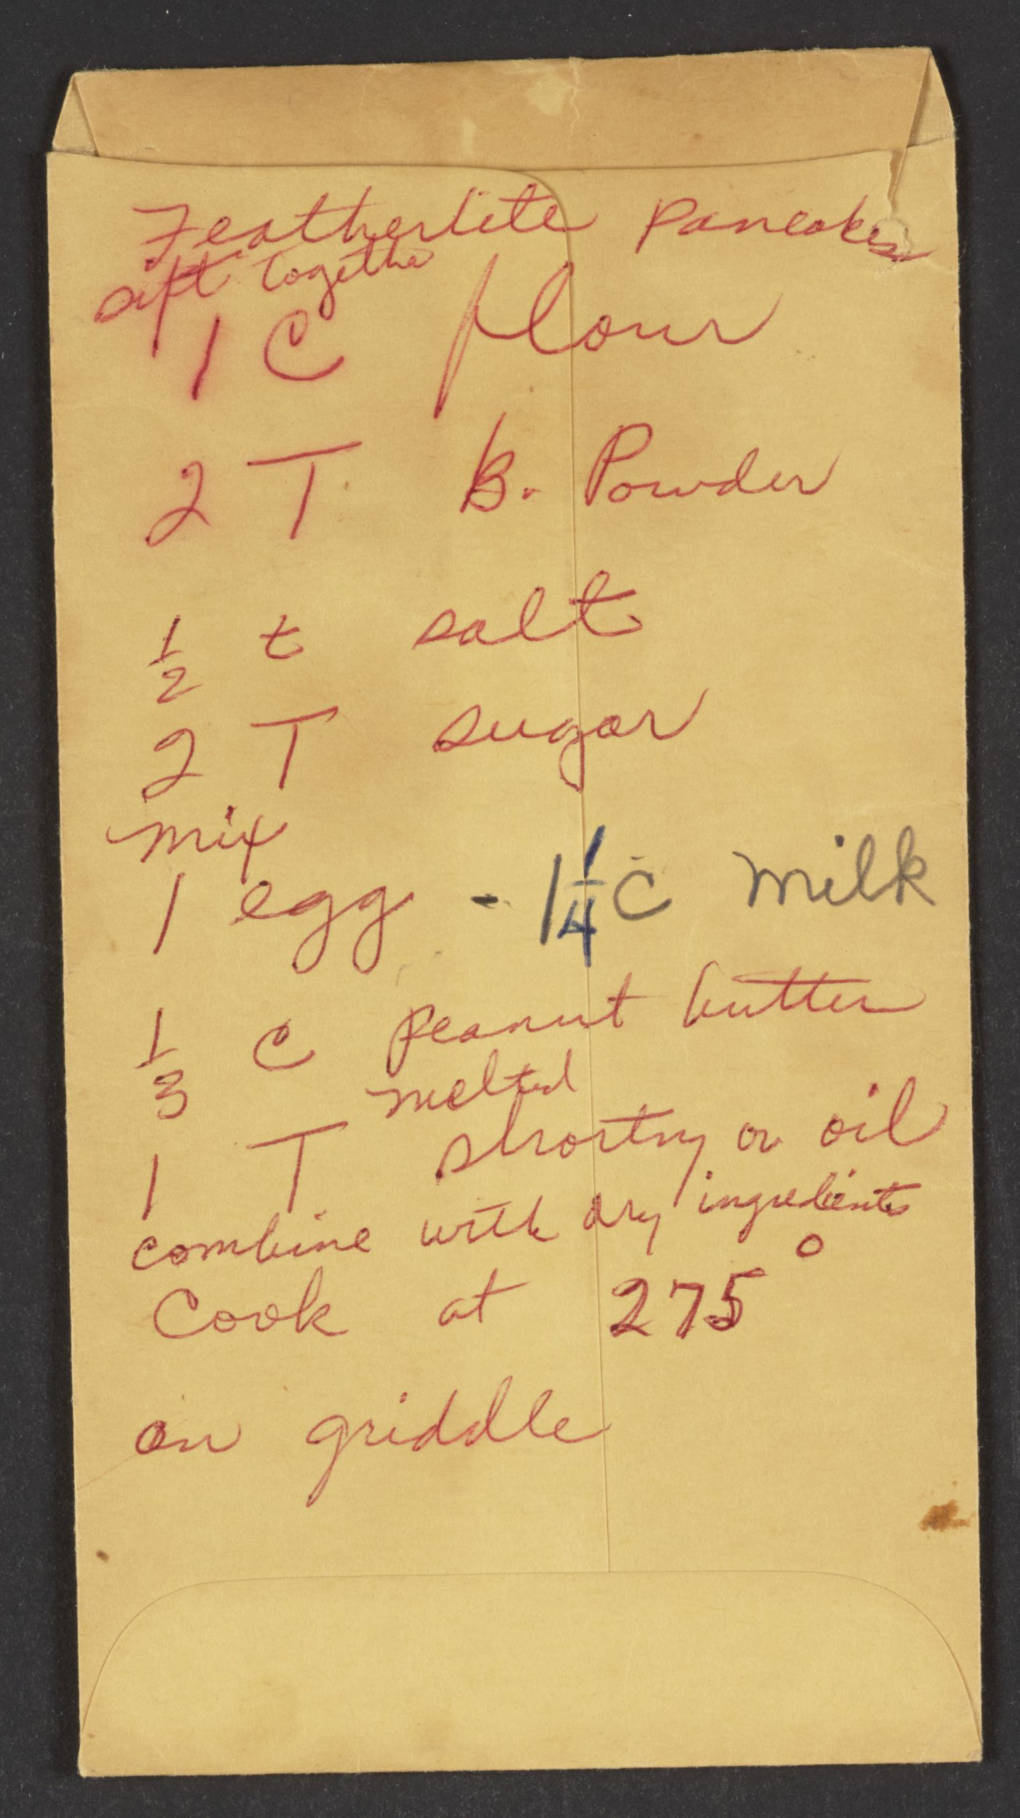 Rosa Parks' "Featherlite Pancakes" recipe calls for peanut butter.